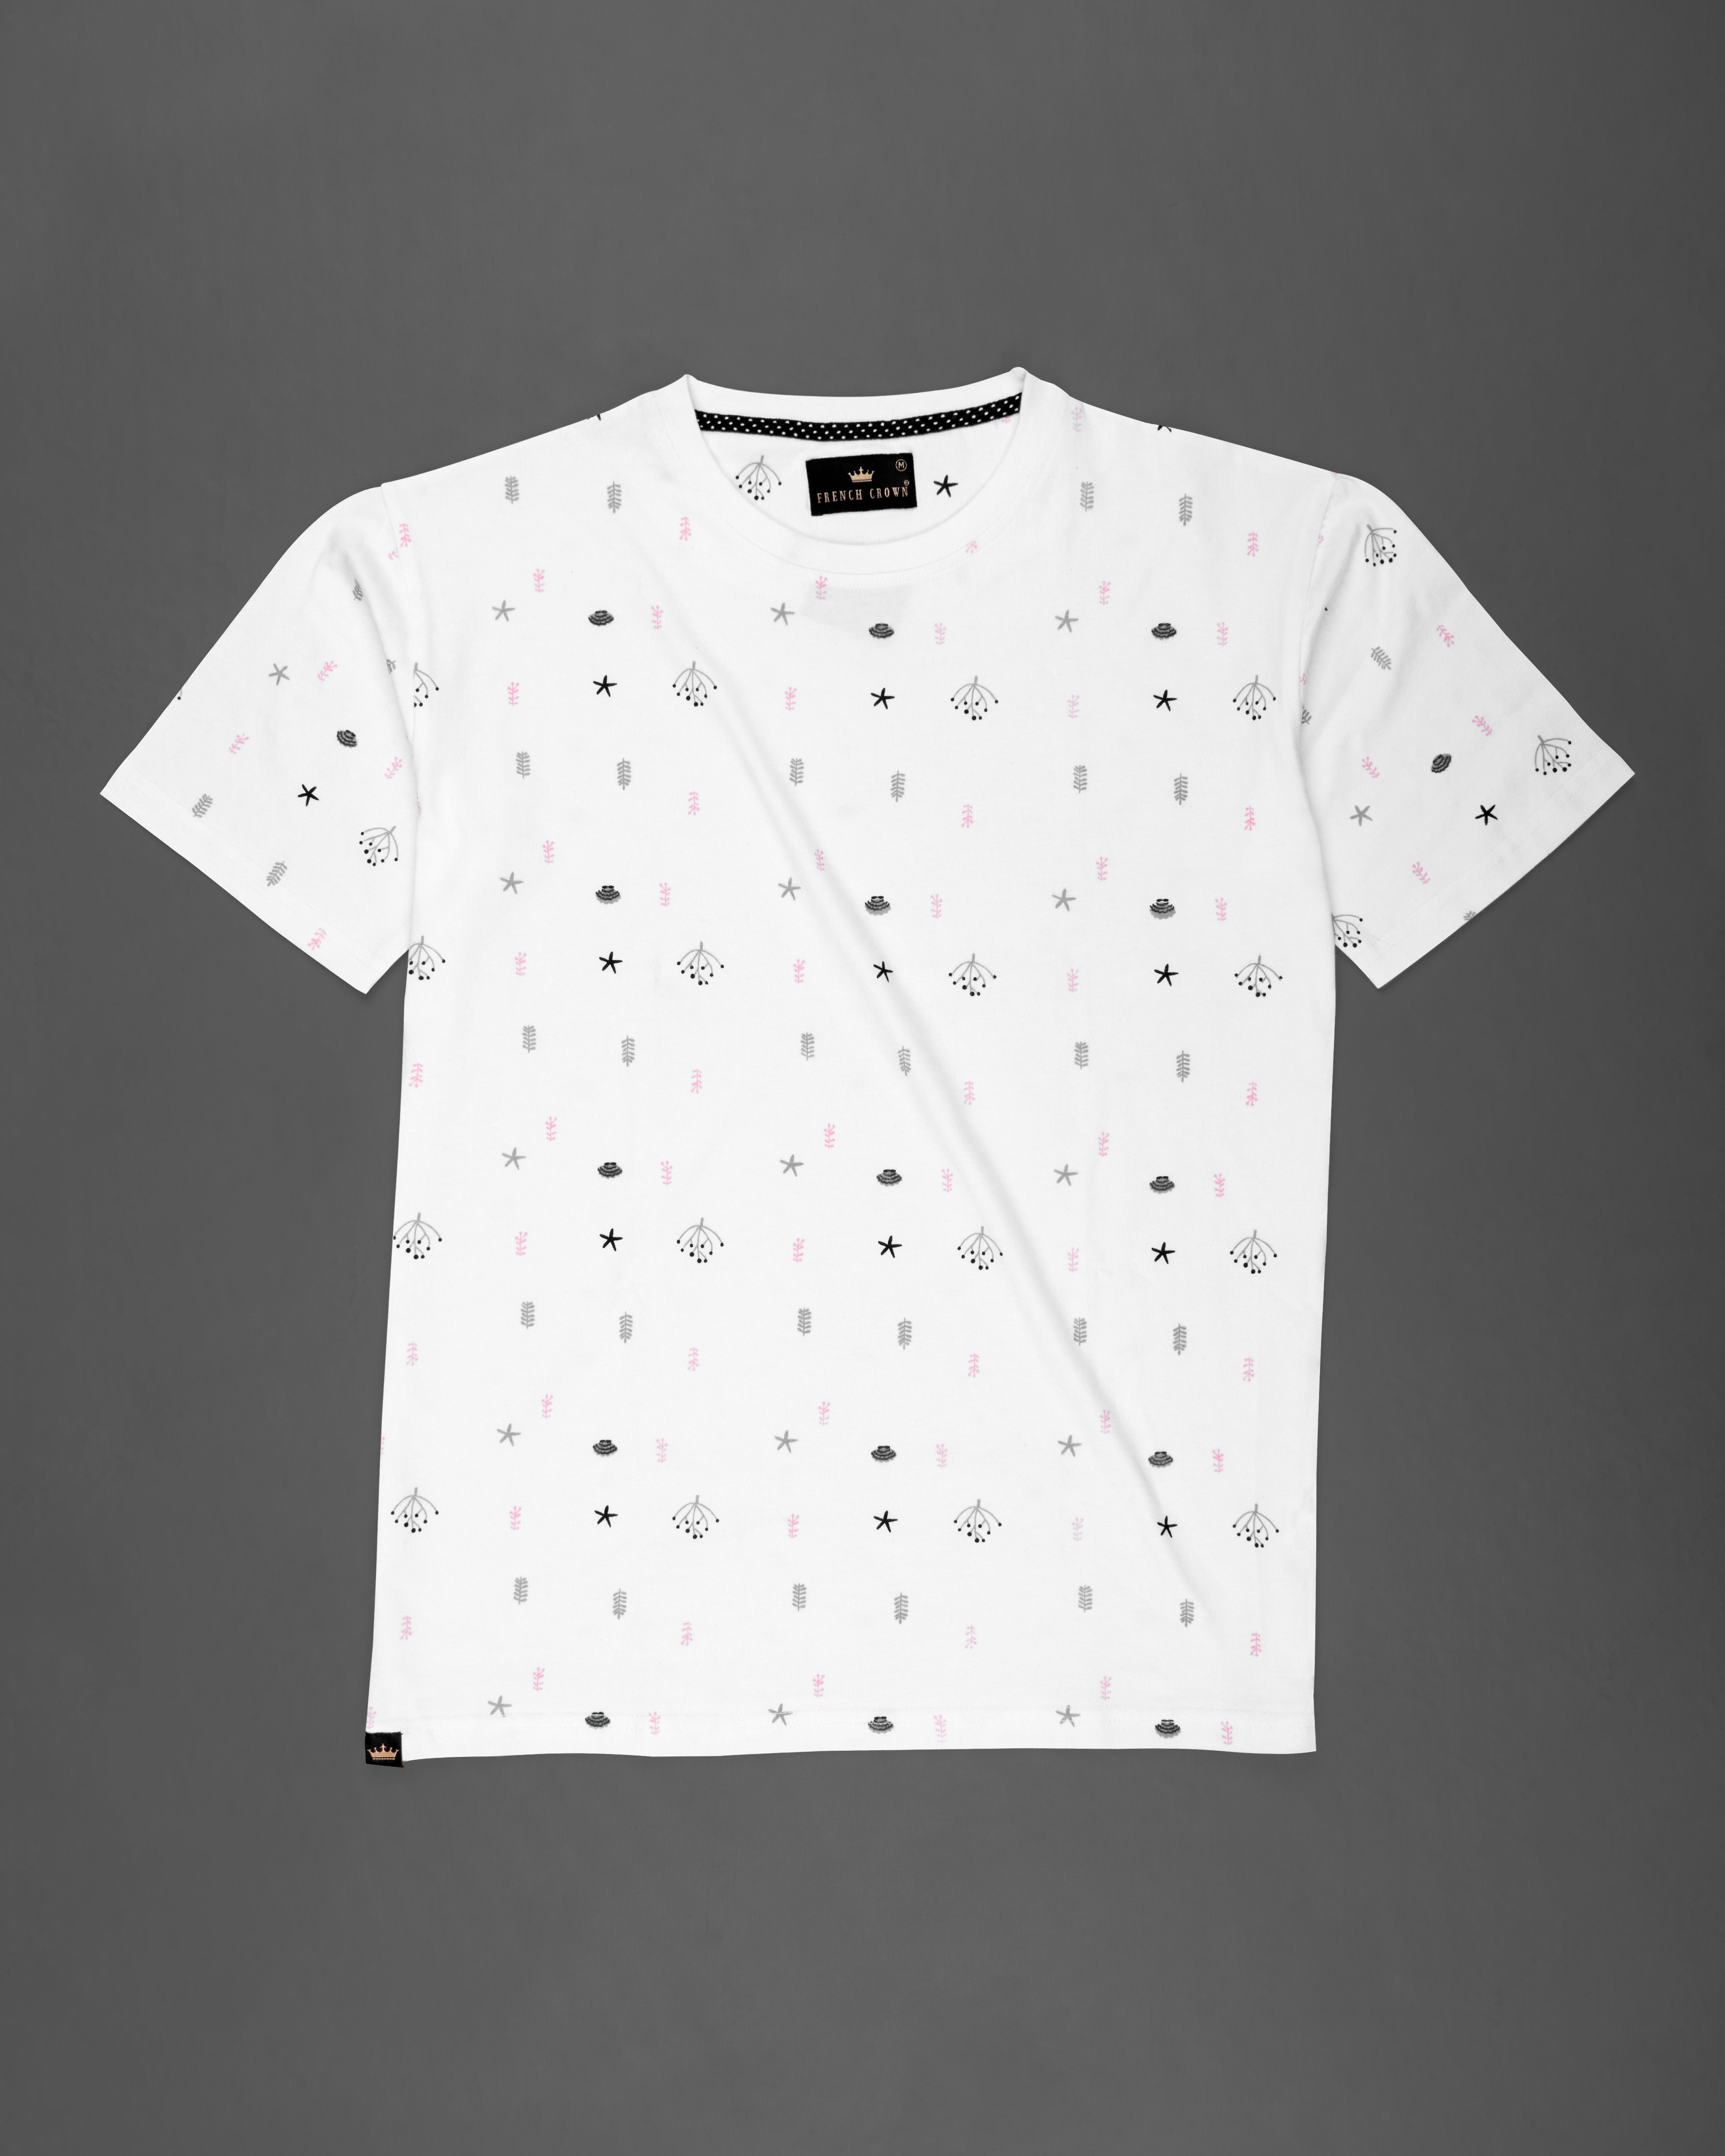 Bright White Printed Organic Cotton T-shirt with Premium Cotton Shorts Combo TS661-SR175-S, TS661-SR175-M, TS661-SR175-L, TS661-SR175-XL, TS661-SR175-XXL